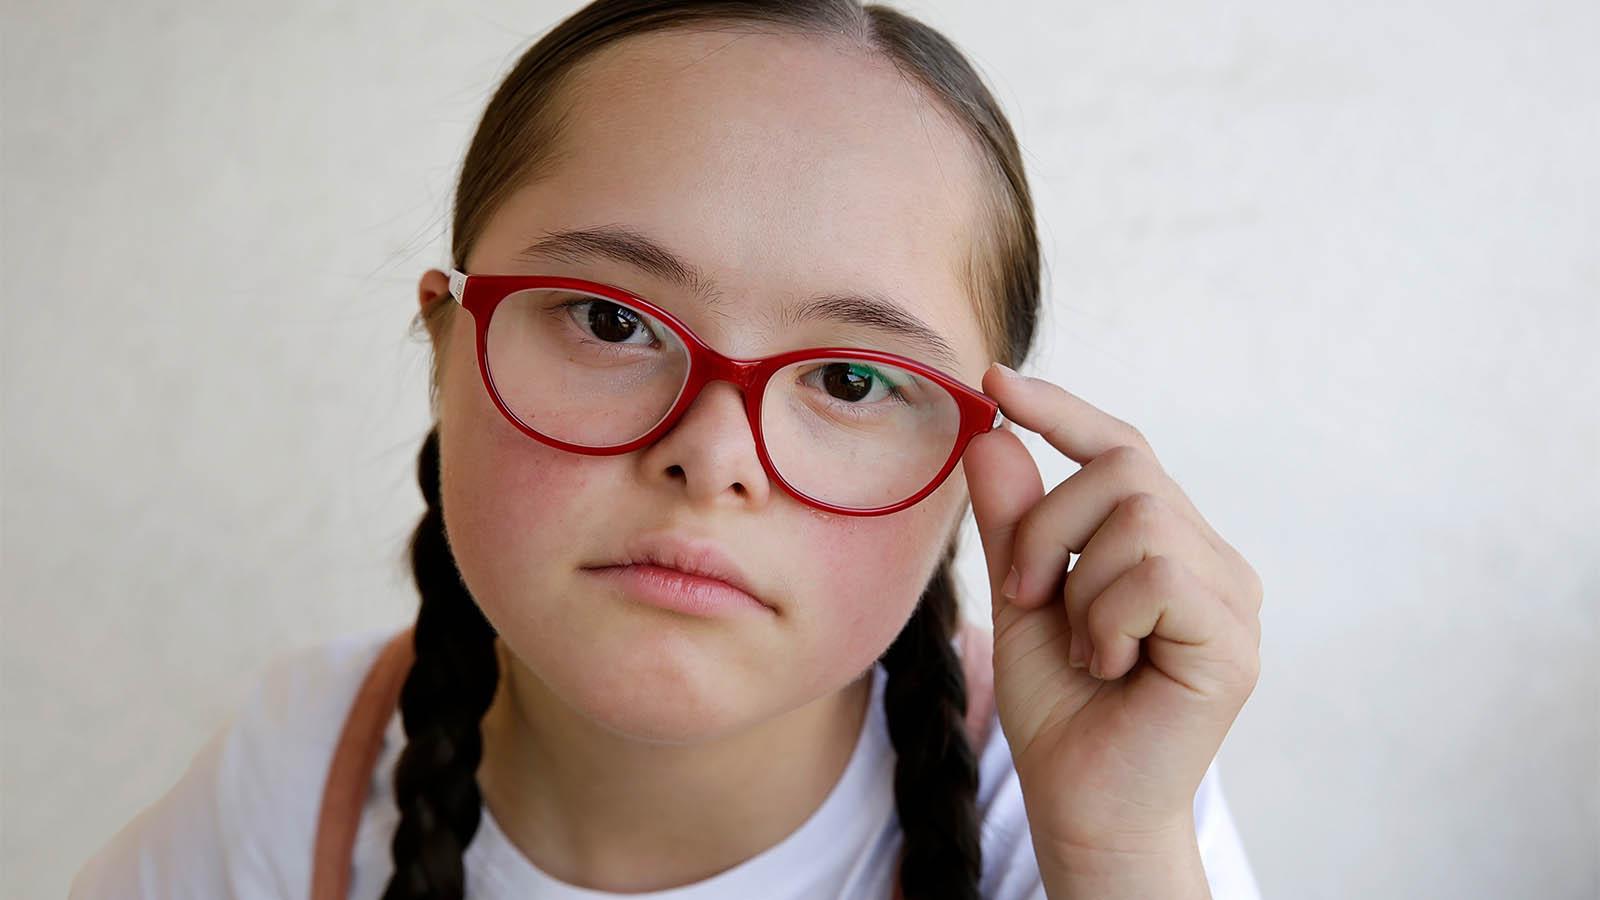 Child in eyeglasses